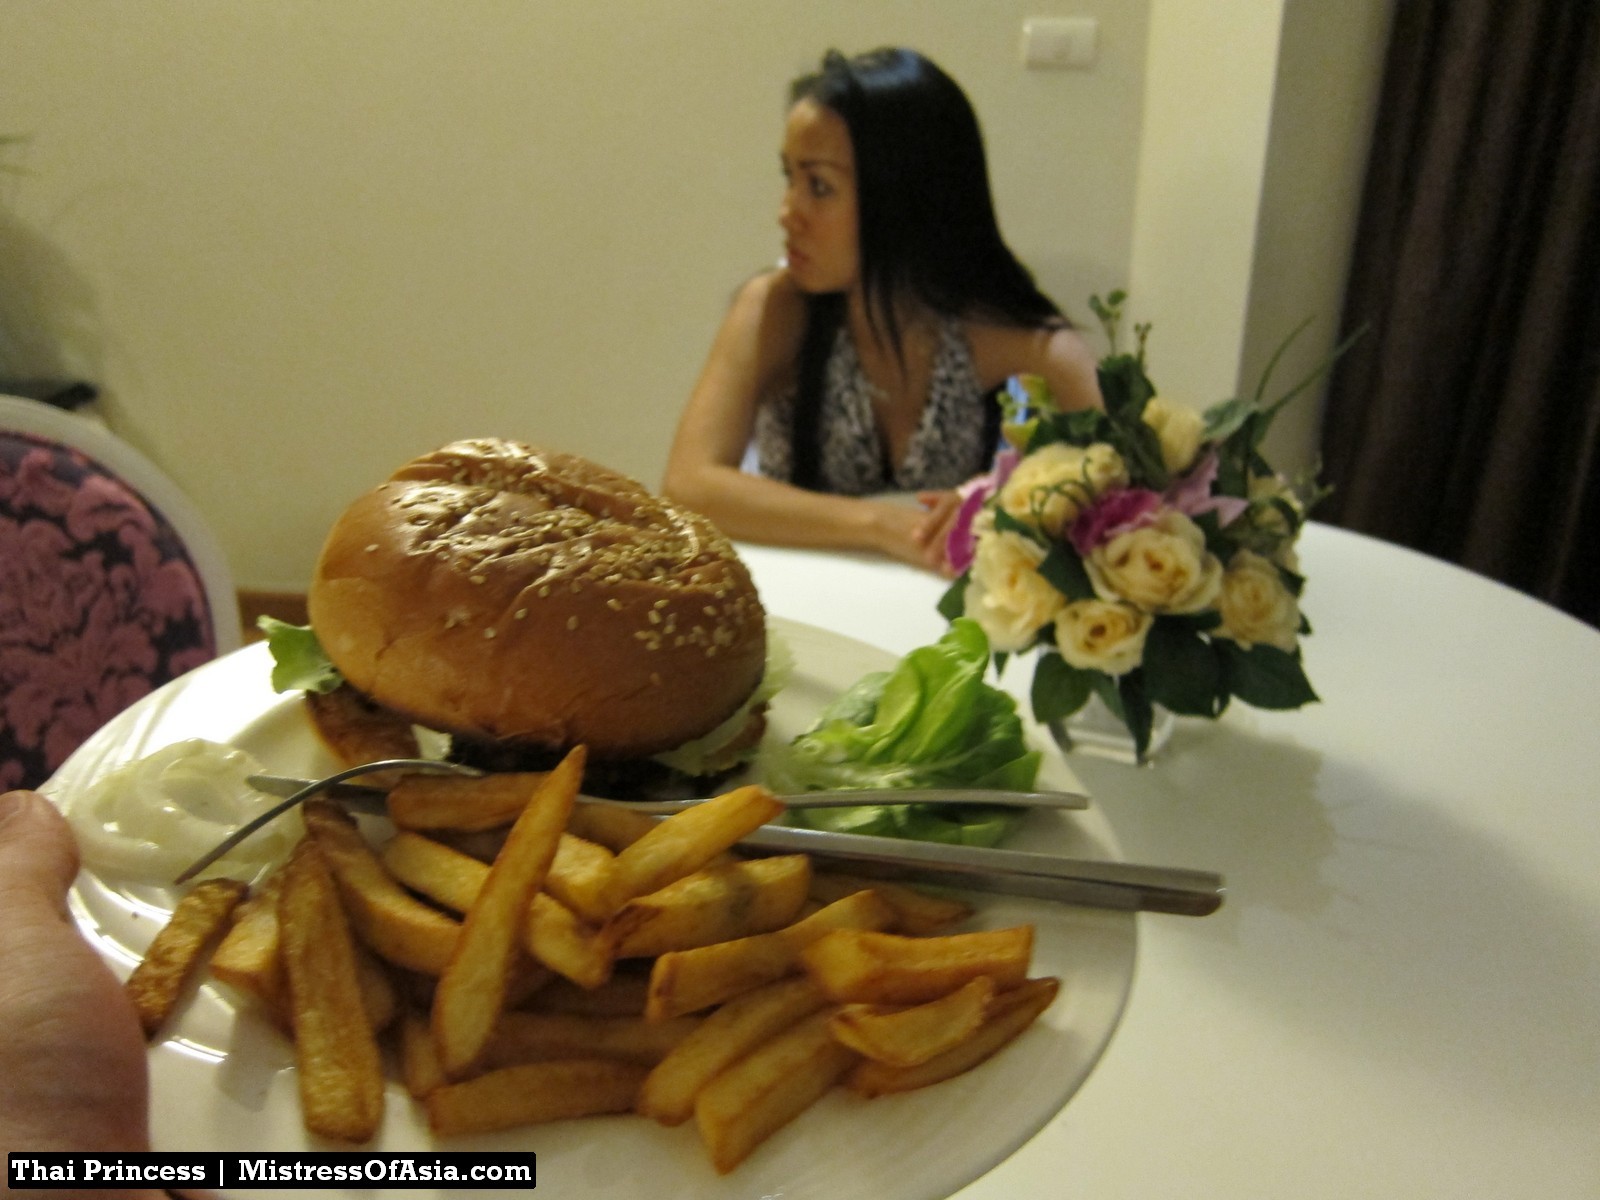 Thai Princess eating burger